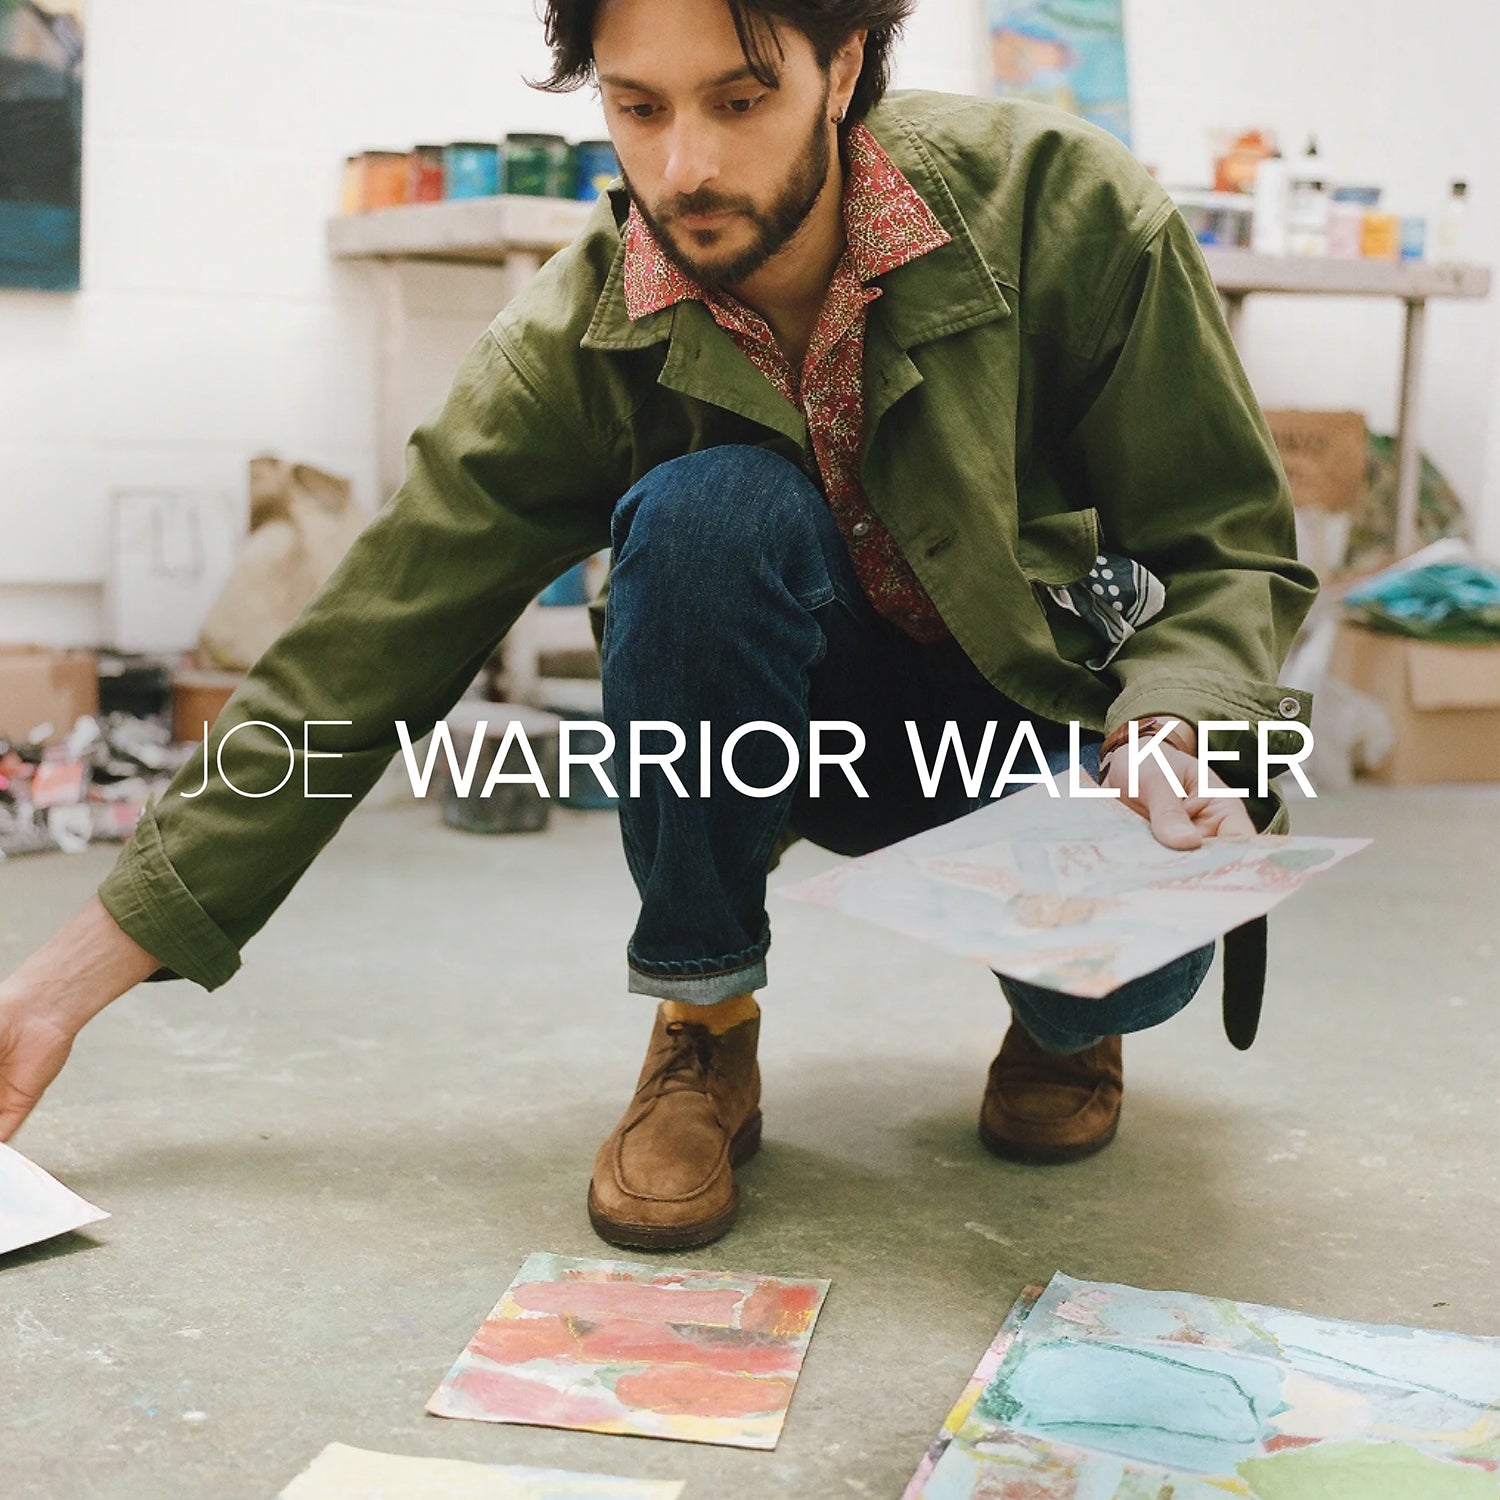 Joe Warrior Walker